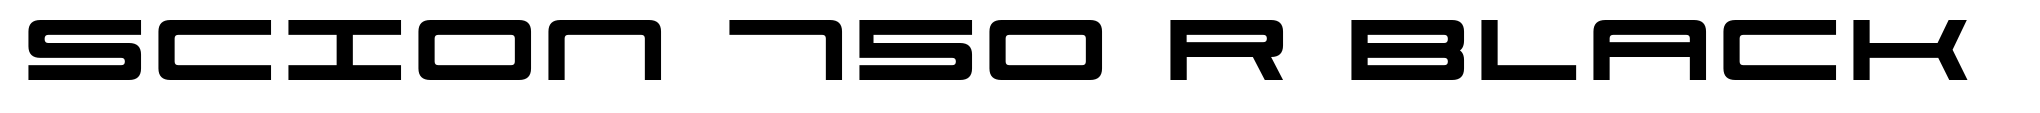 Scion 750 R Black image